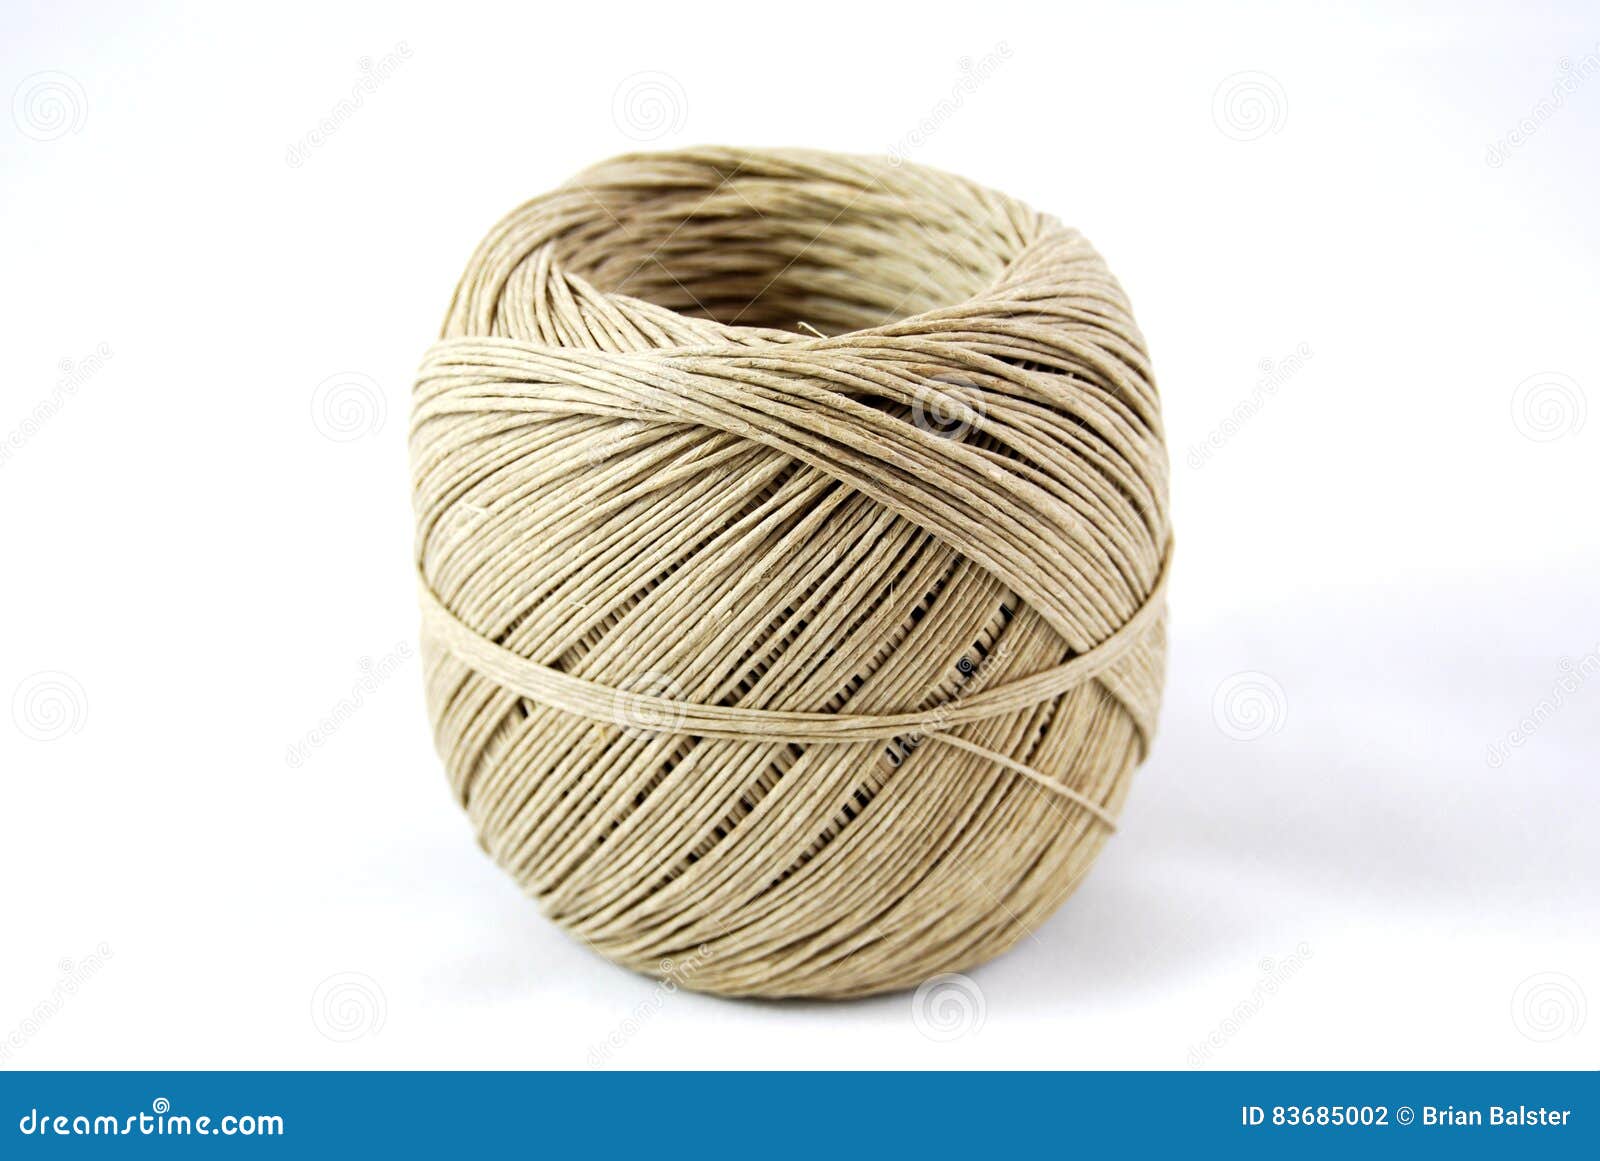 Hemp String Twine Roll stock photo. Image of craft, making - 83685002